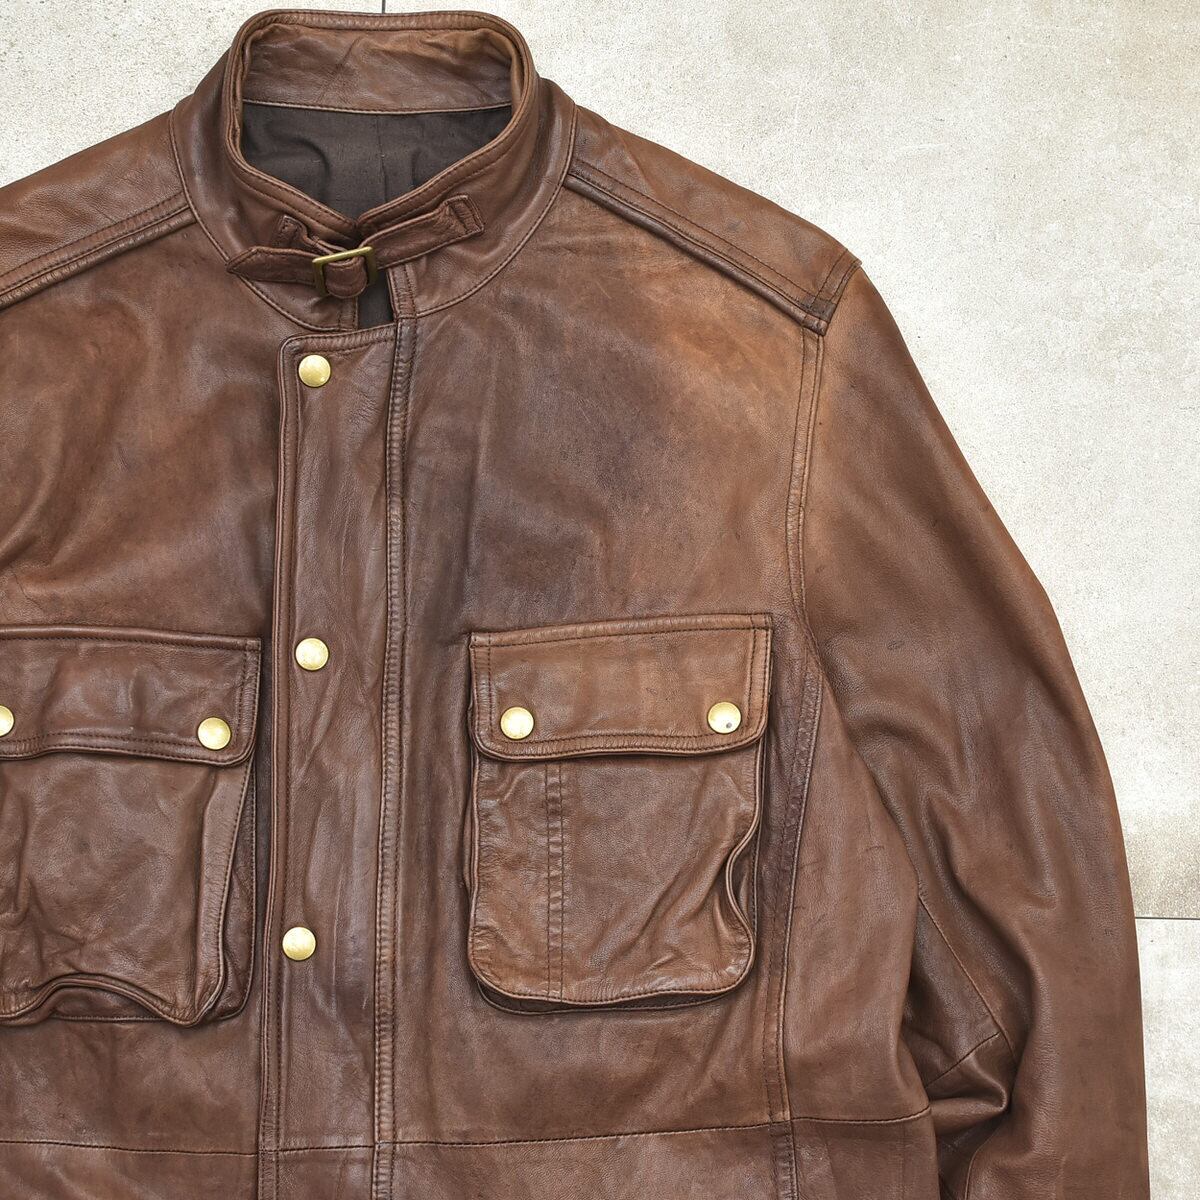 Vtg brown leather safari jacket